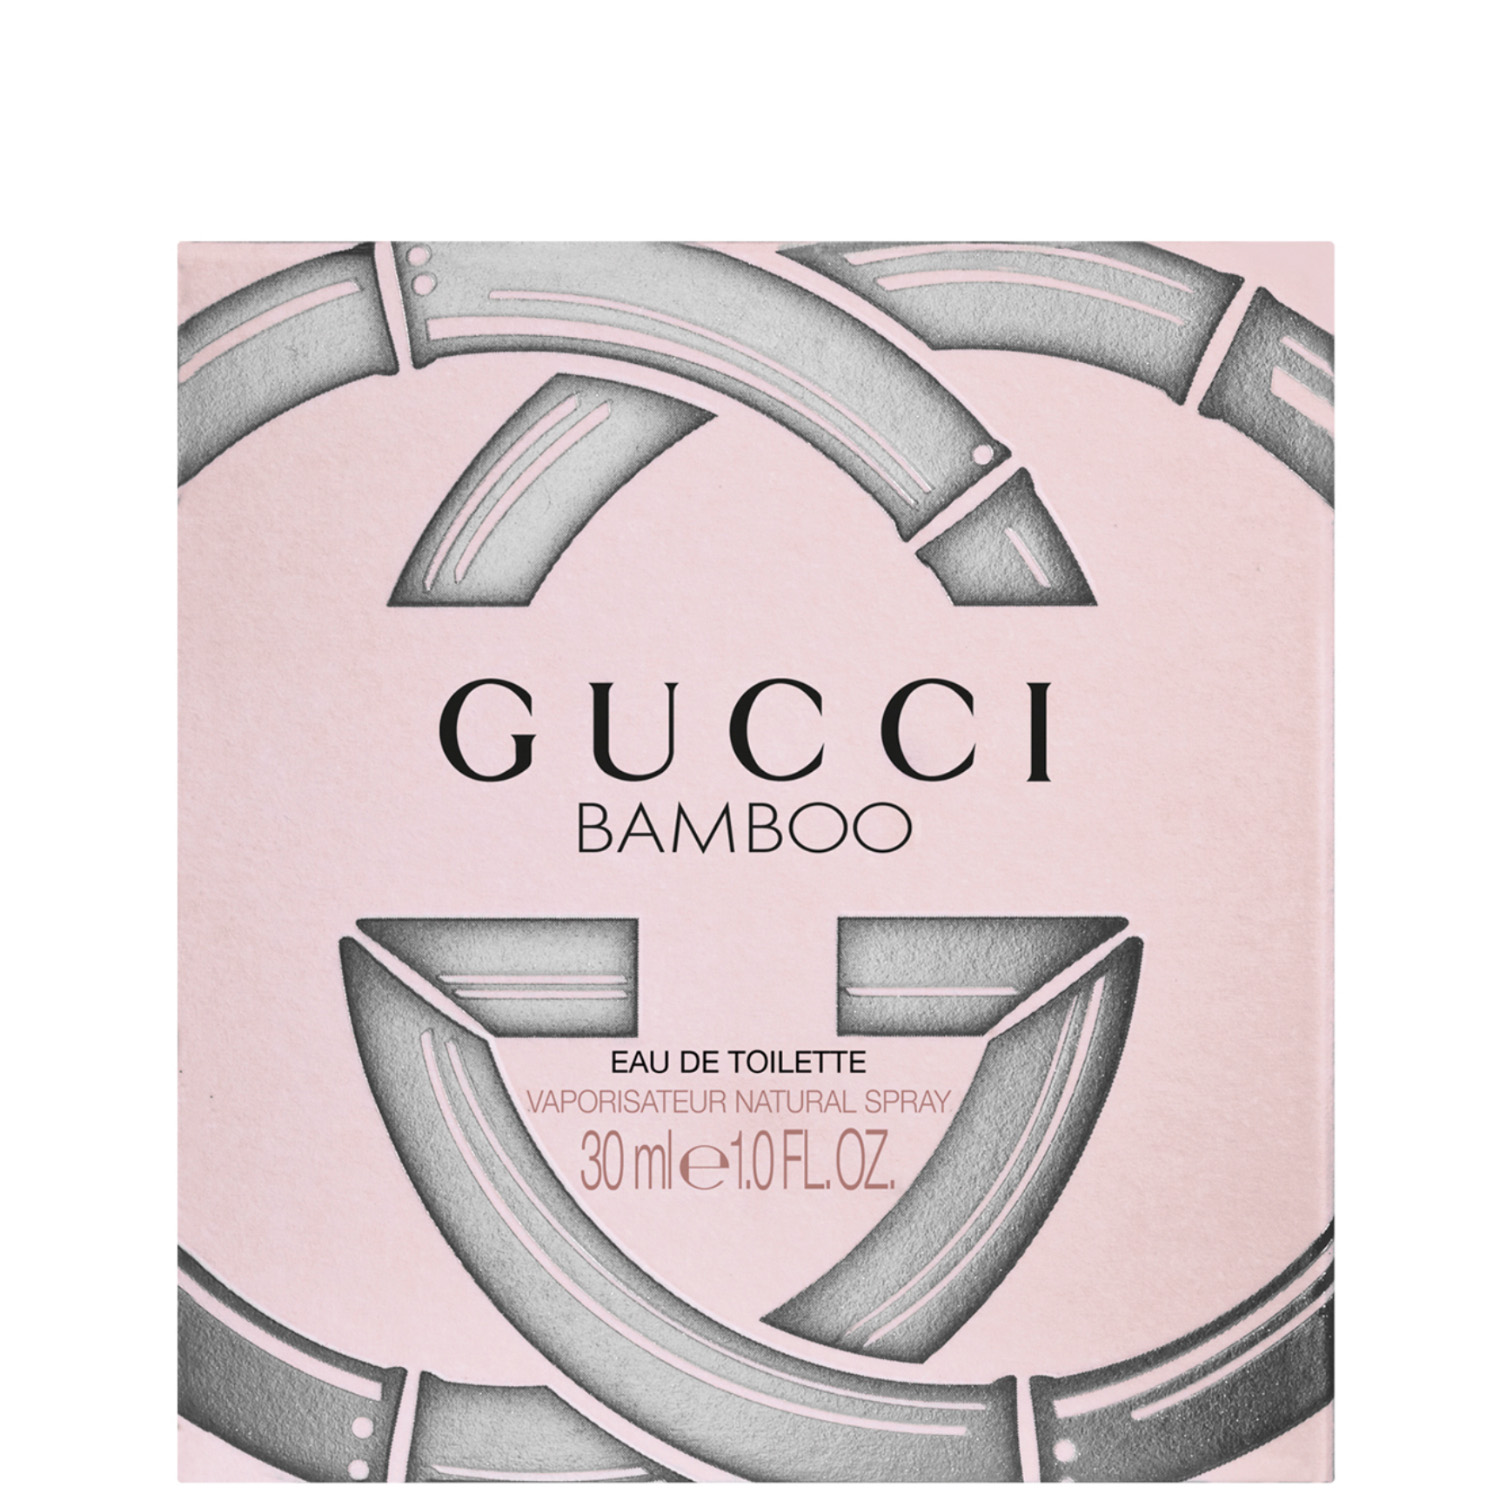 Gucci Bamboo Eau de Toilette 30ml